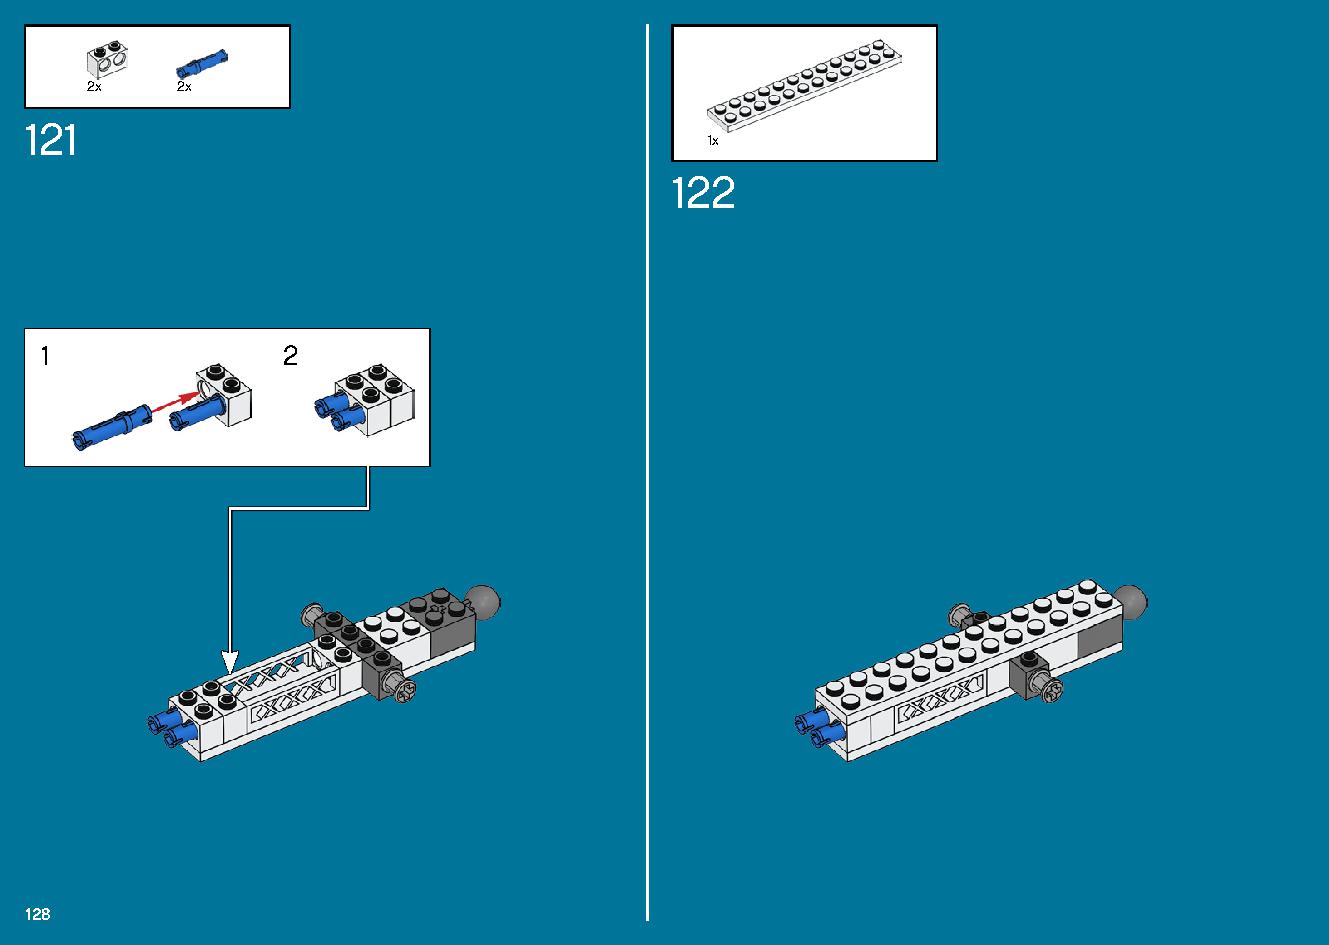 International Space Station 21321 レゴの商品情報 レゴの説明書・組立方法 128 page